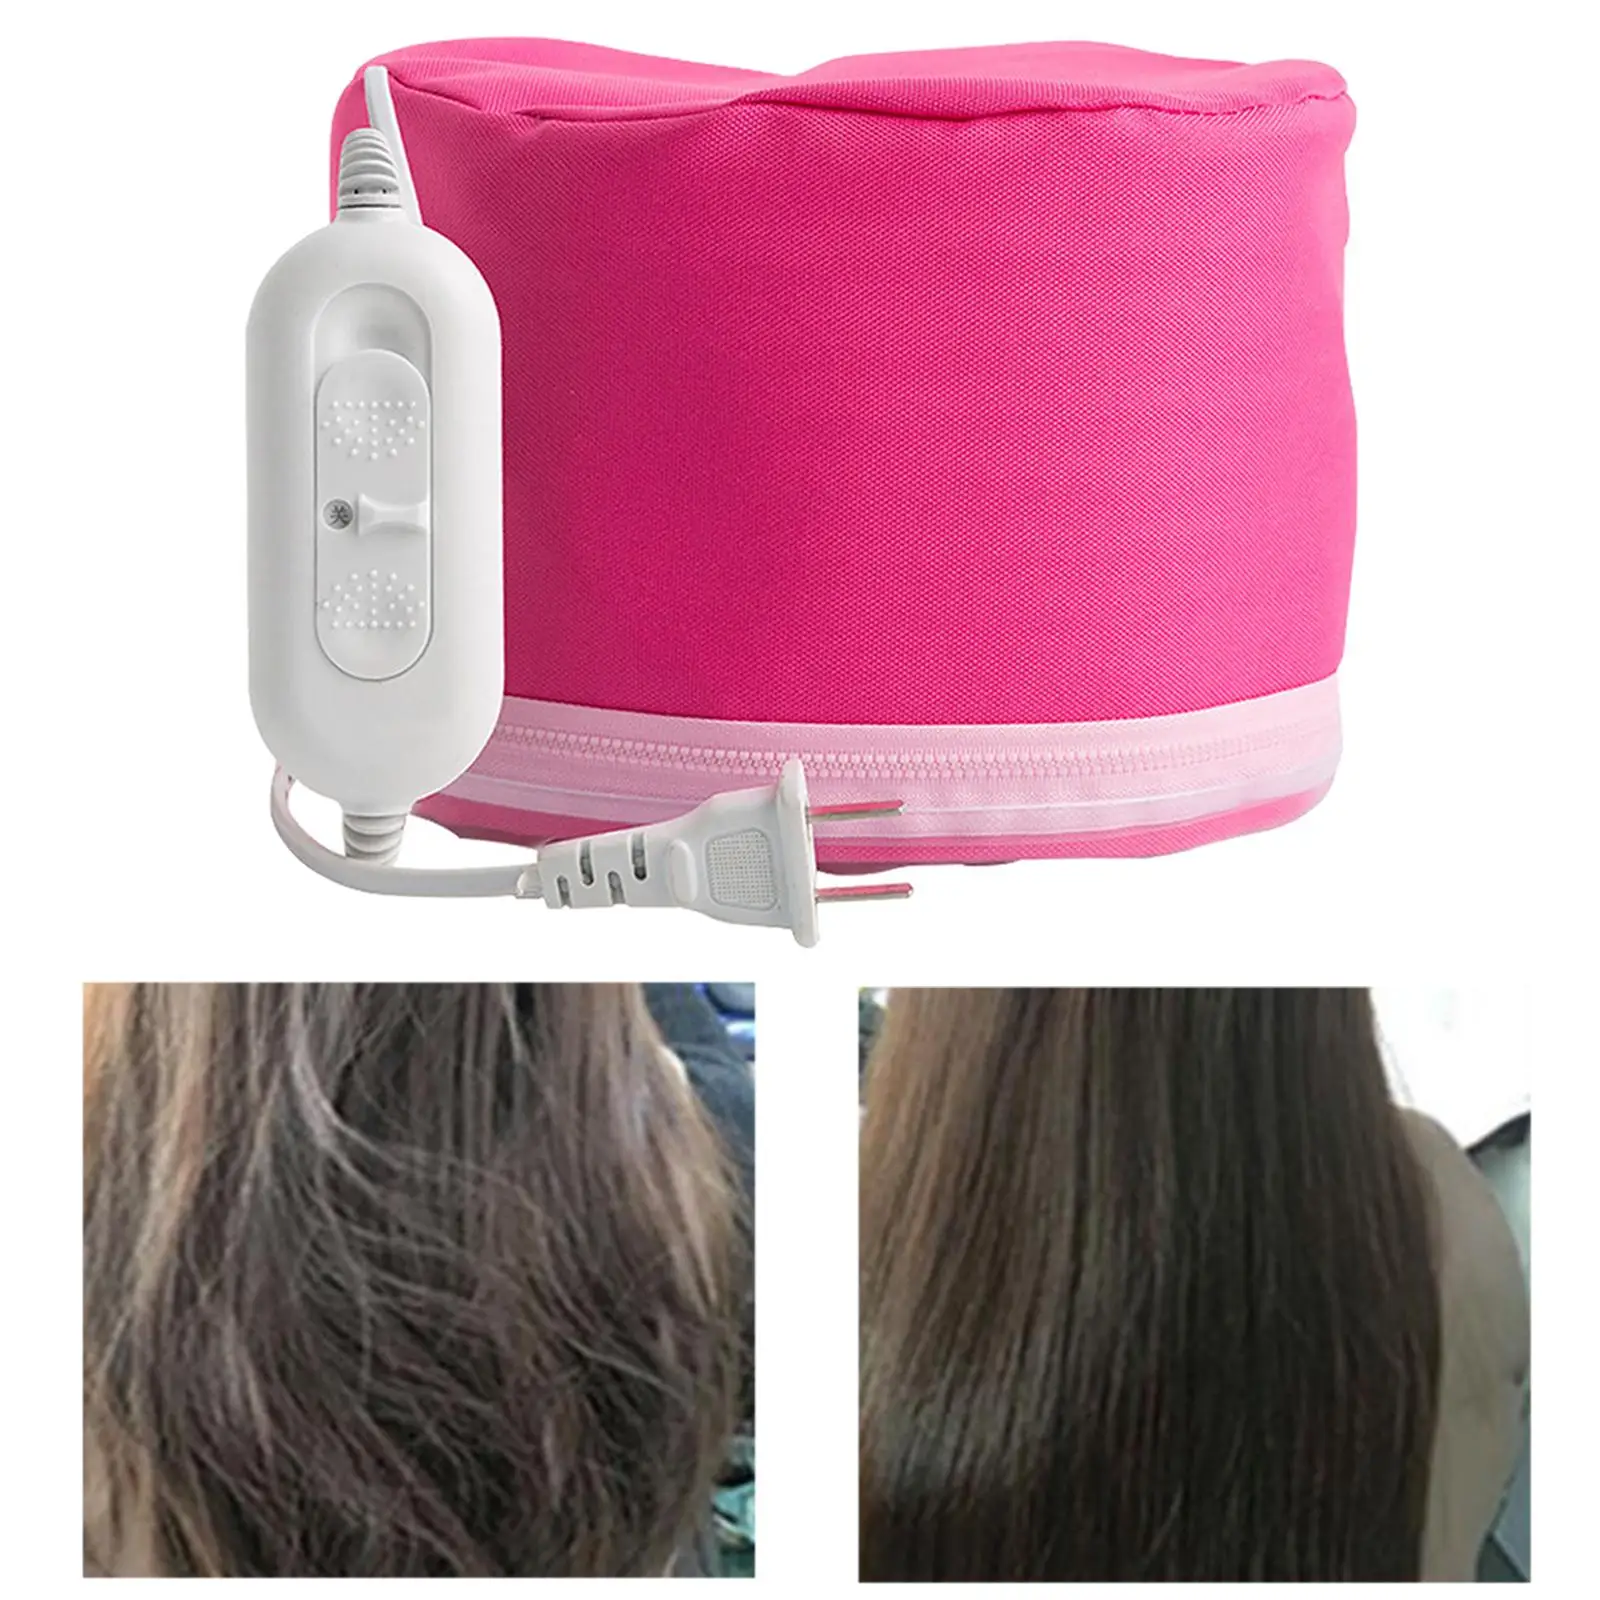 Hair Heating Caps Steamer 3-Mode Adjustable Size Safe Dryers Hair Steamer for Deep Conditioning Home Salon Nourishing Women Men